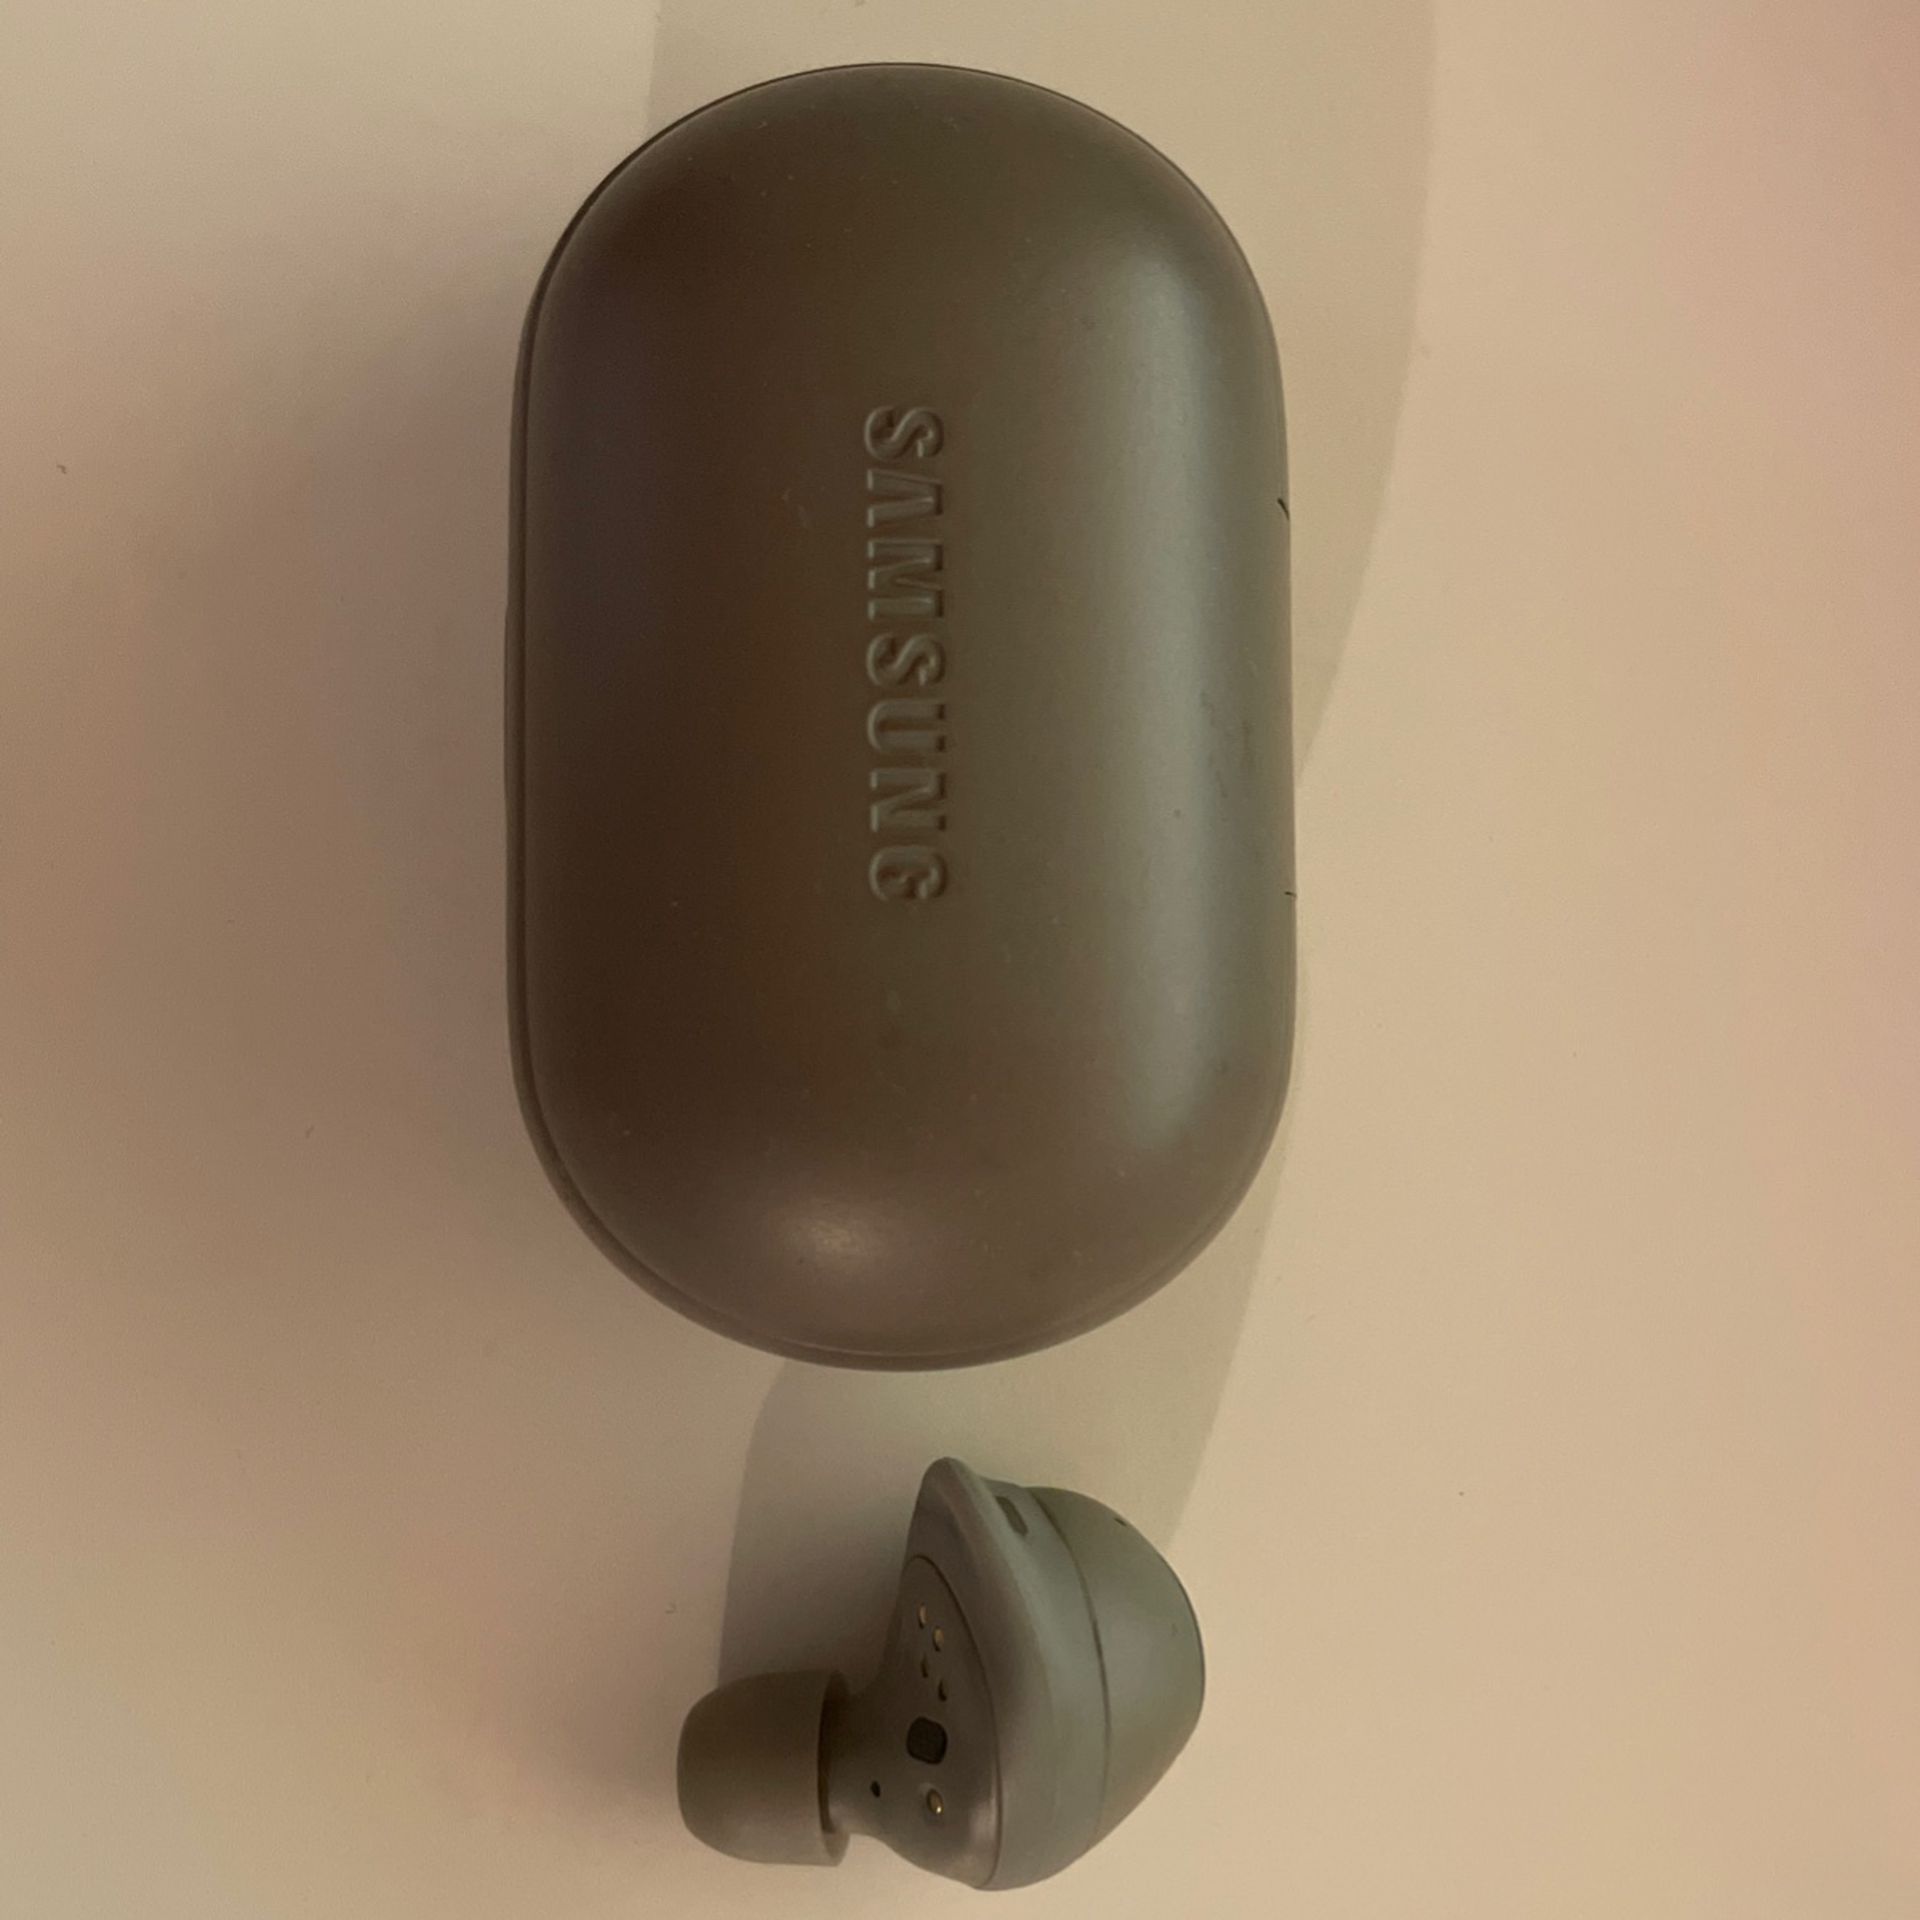 Samsung Gear IconX Wireless Earbuds (2018)